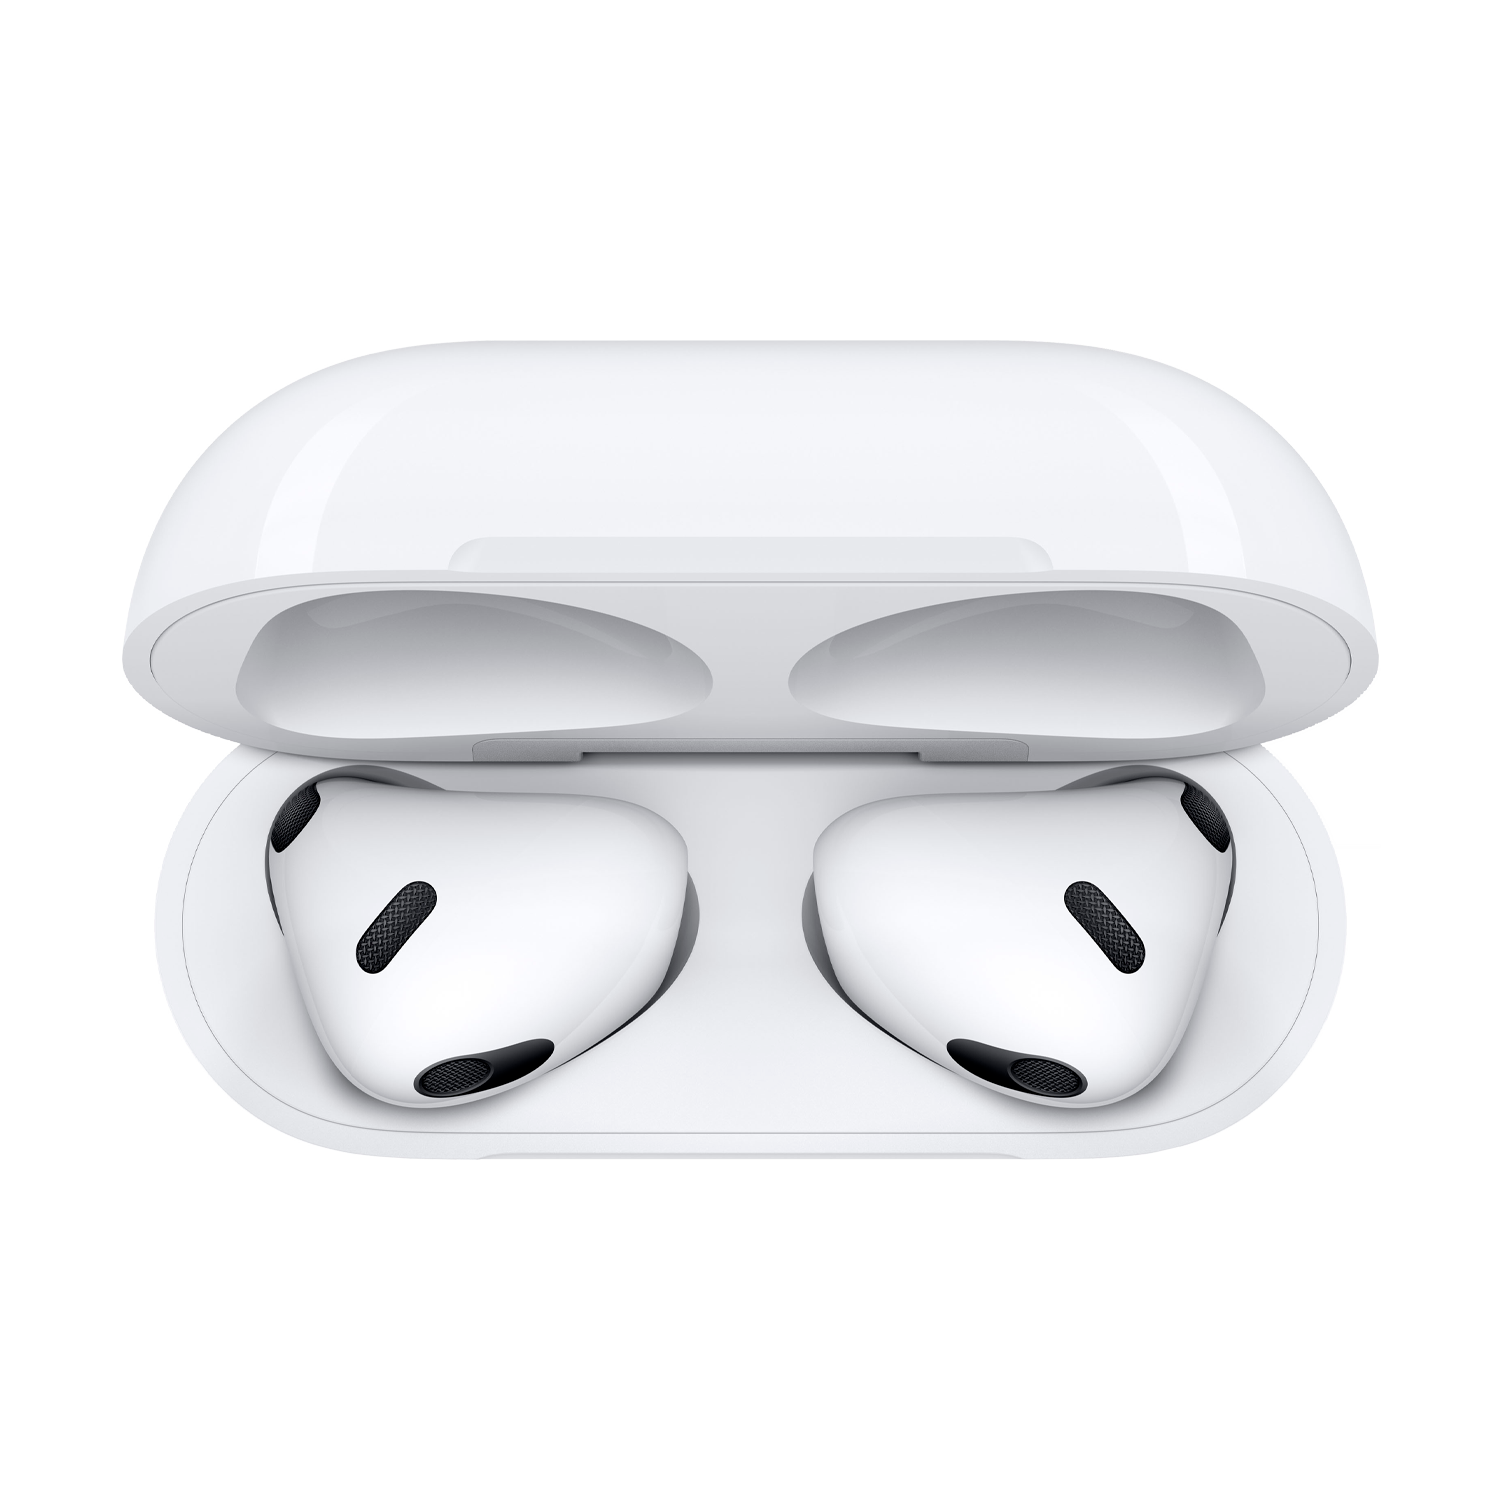 Fone de Ouvido Apple Airpods 3 MME73AM/A - Branco (Caixa Danificada)
